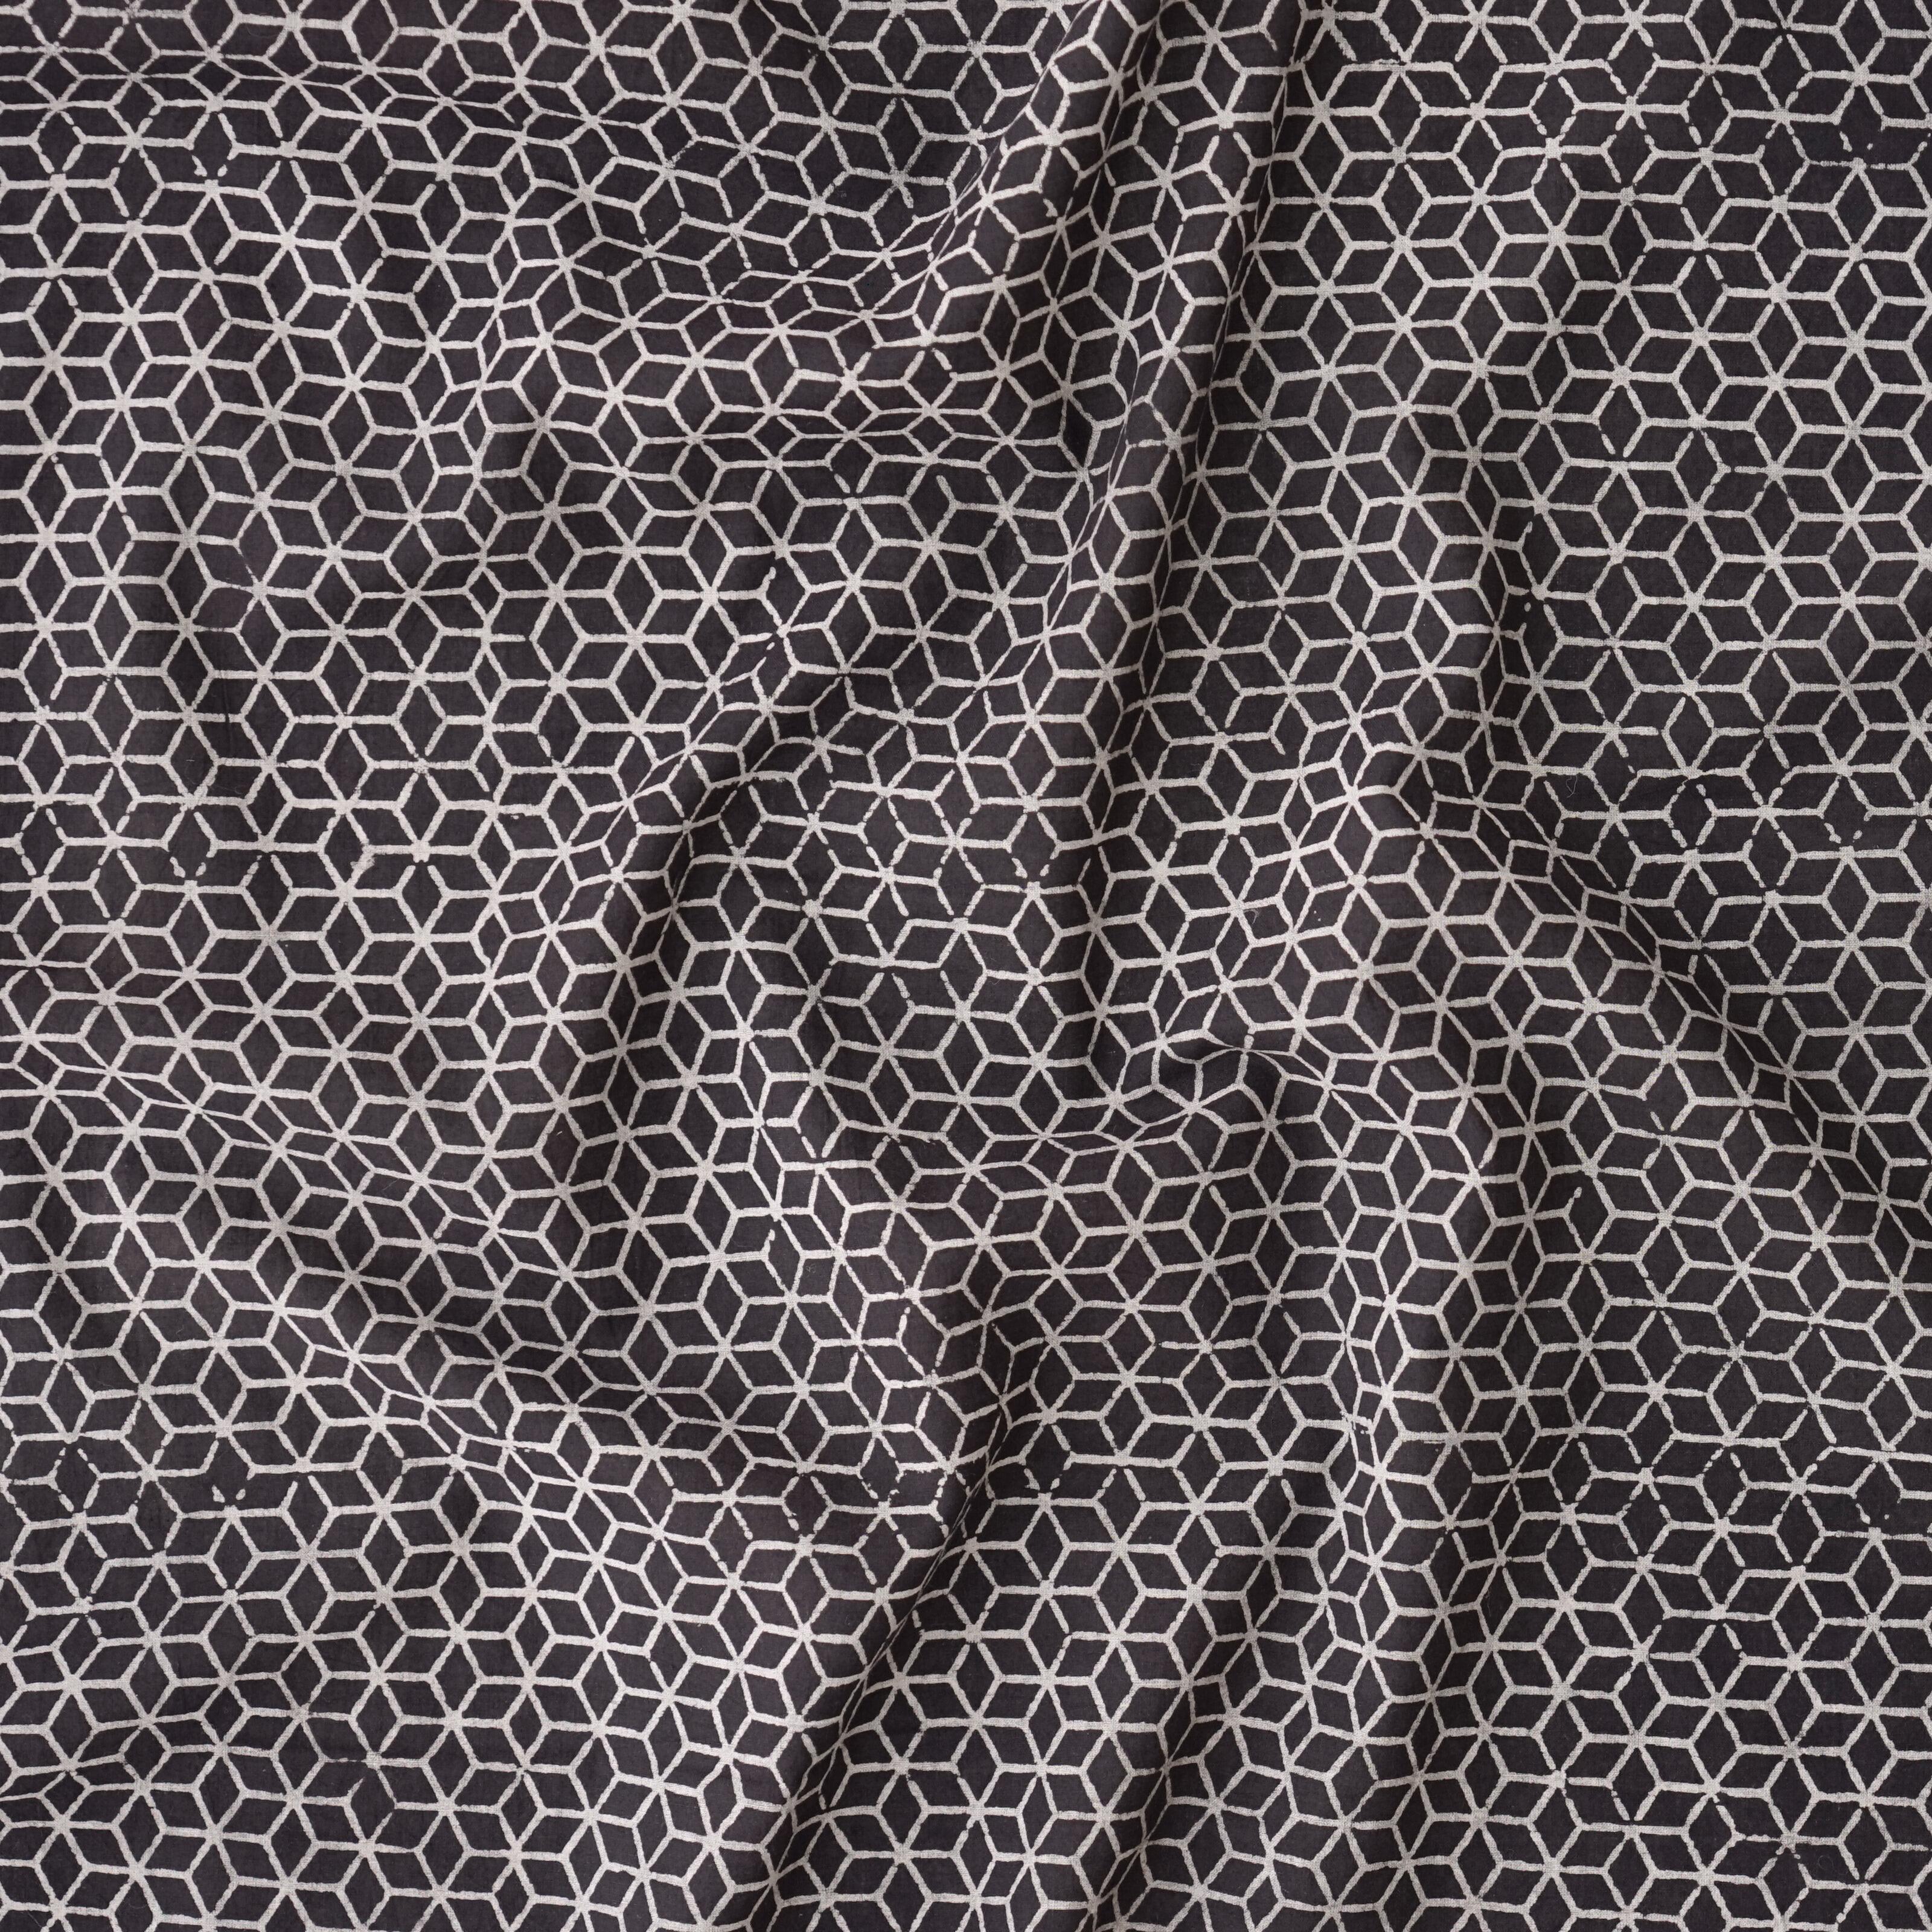 Block Printed Fabric, 100% Cotton, Ajrak Design: Iron Black Base, White Tumbling Block. Contrast